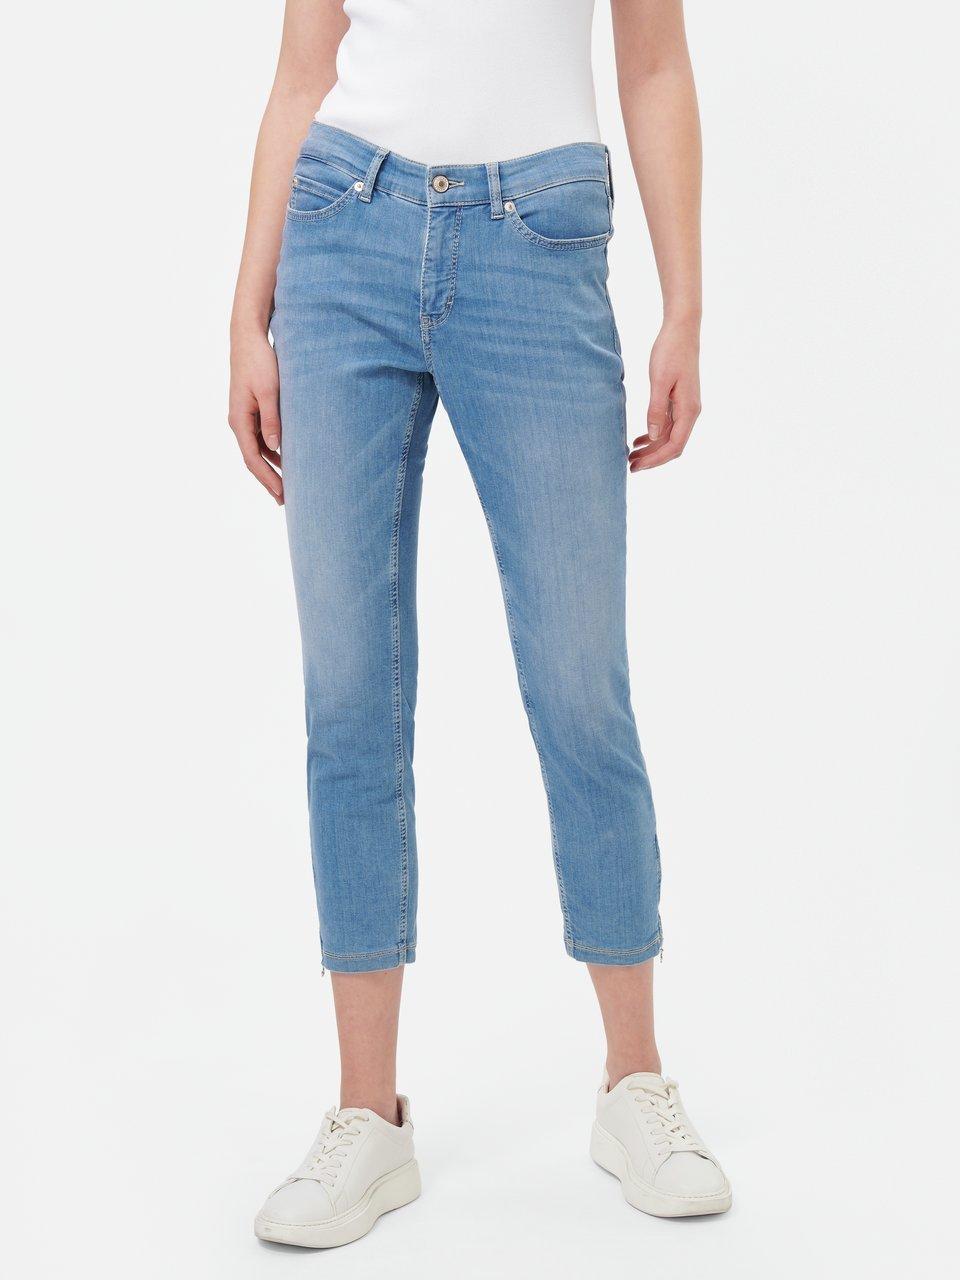 Mac - Jeans Dream Chic met extra smalle pijpen